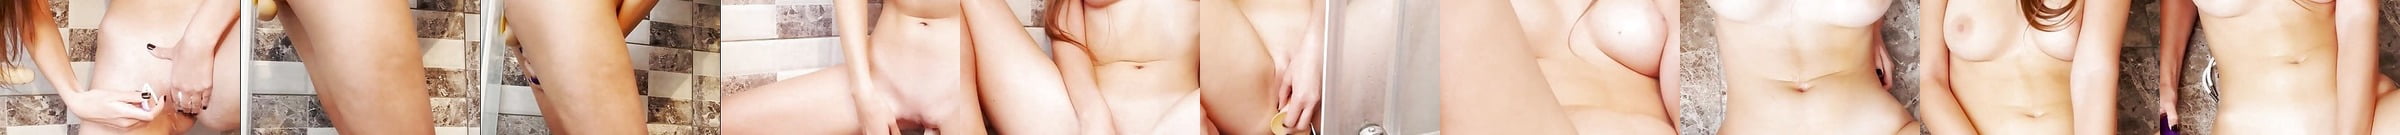 Yoya Grey Porn Creator Videos Free Amateur Nudes Xhamster